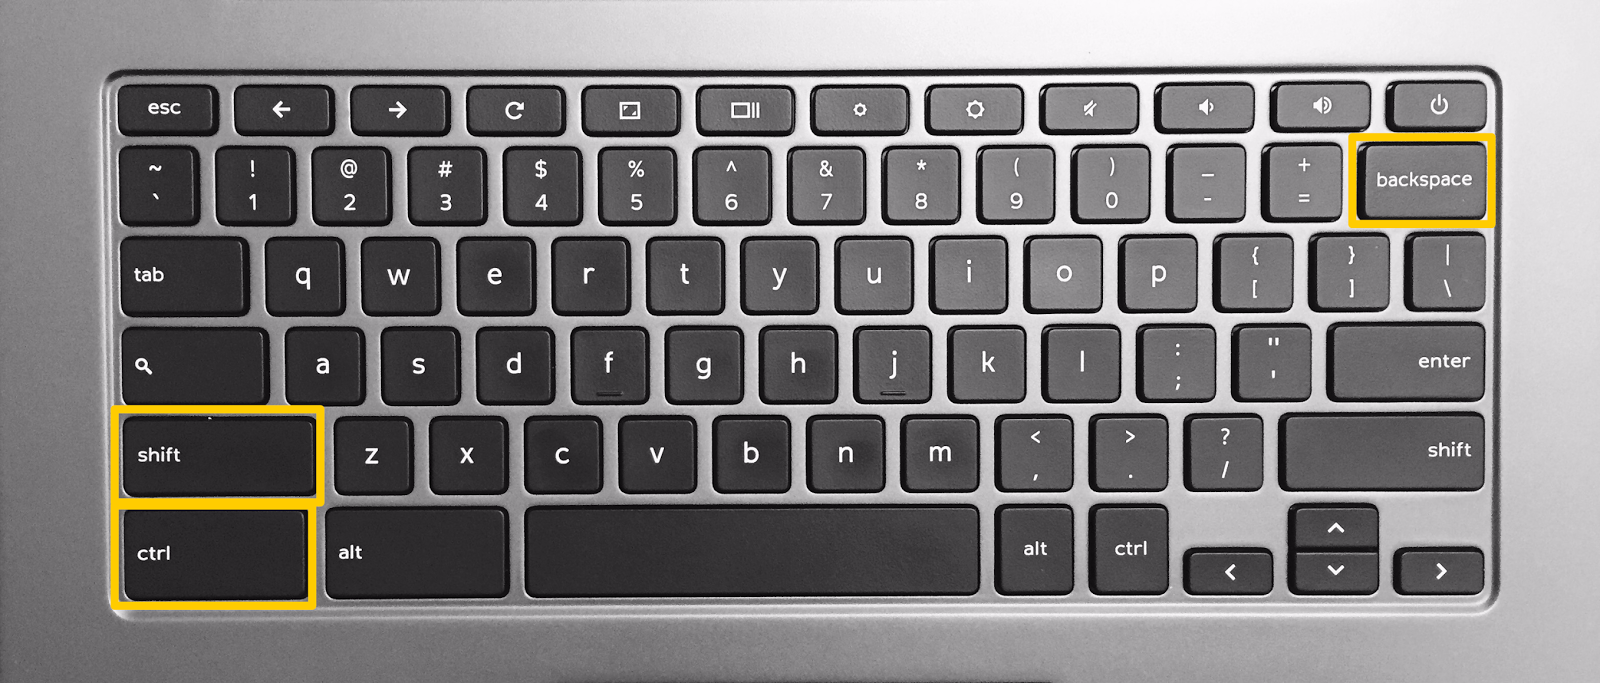 Enter shift клавиши. Клавиша шифт на клавиатуре. Контр Альт шифт. Клавиша Shift на ноутбуке. Shift Tab на клавиатуре.